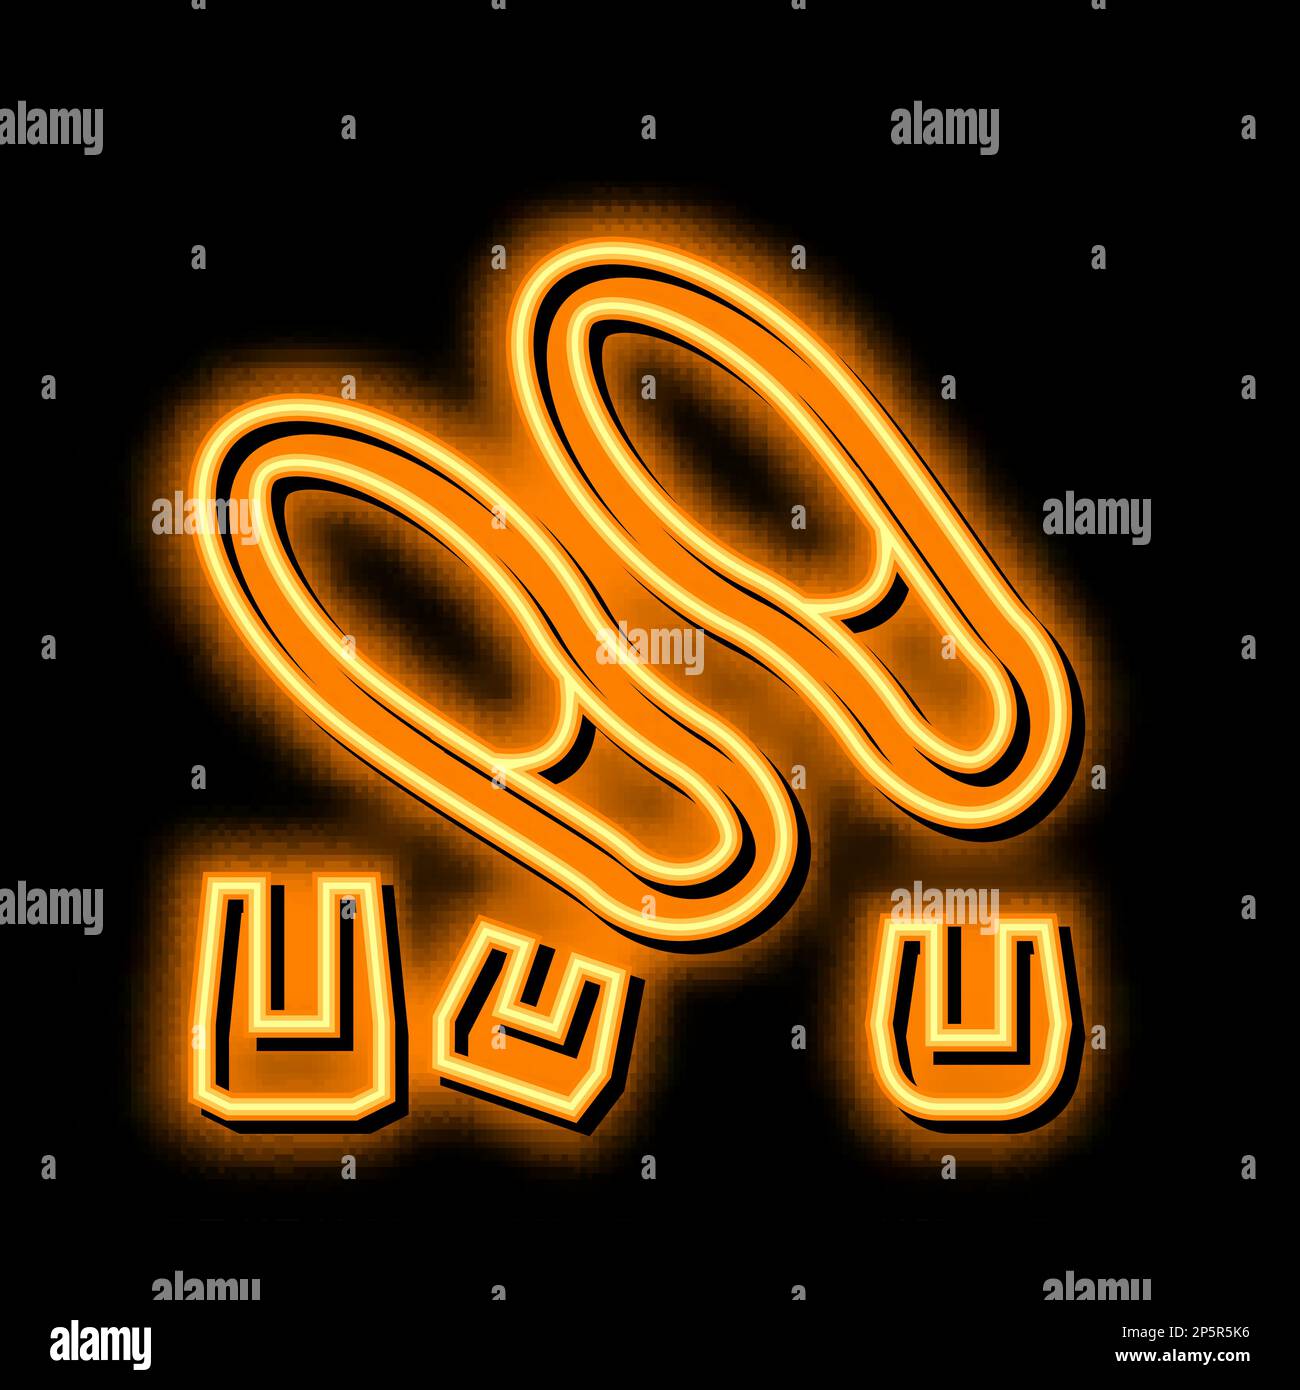 natural rubber elastomer neon glow icon illustration Stock Vector